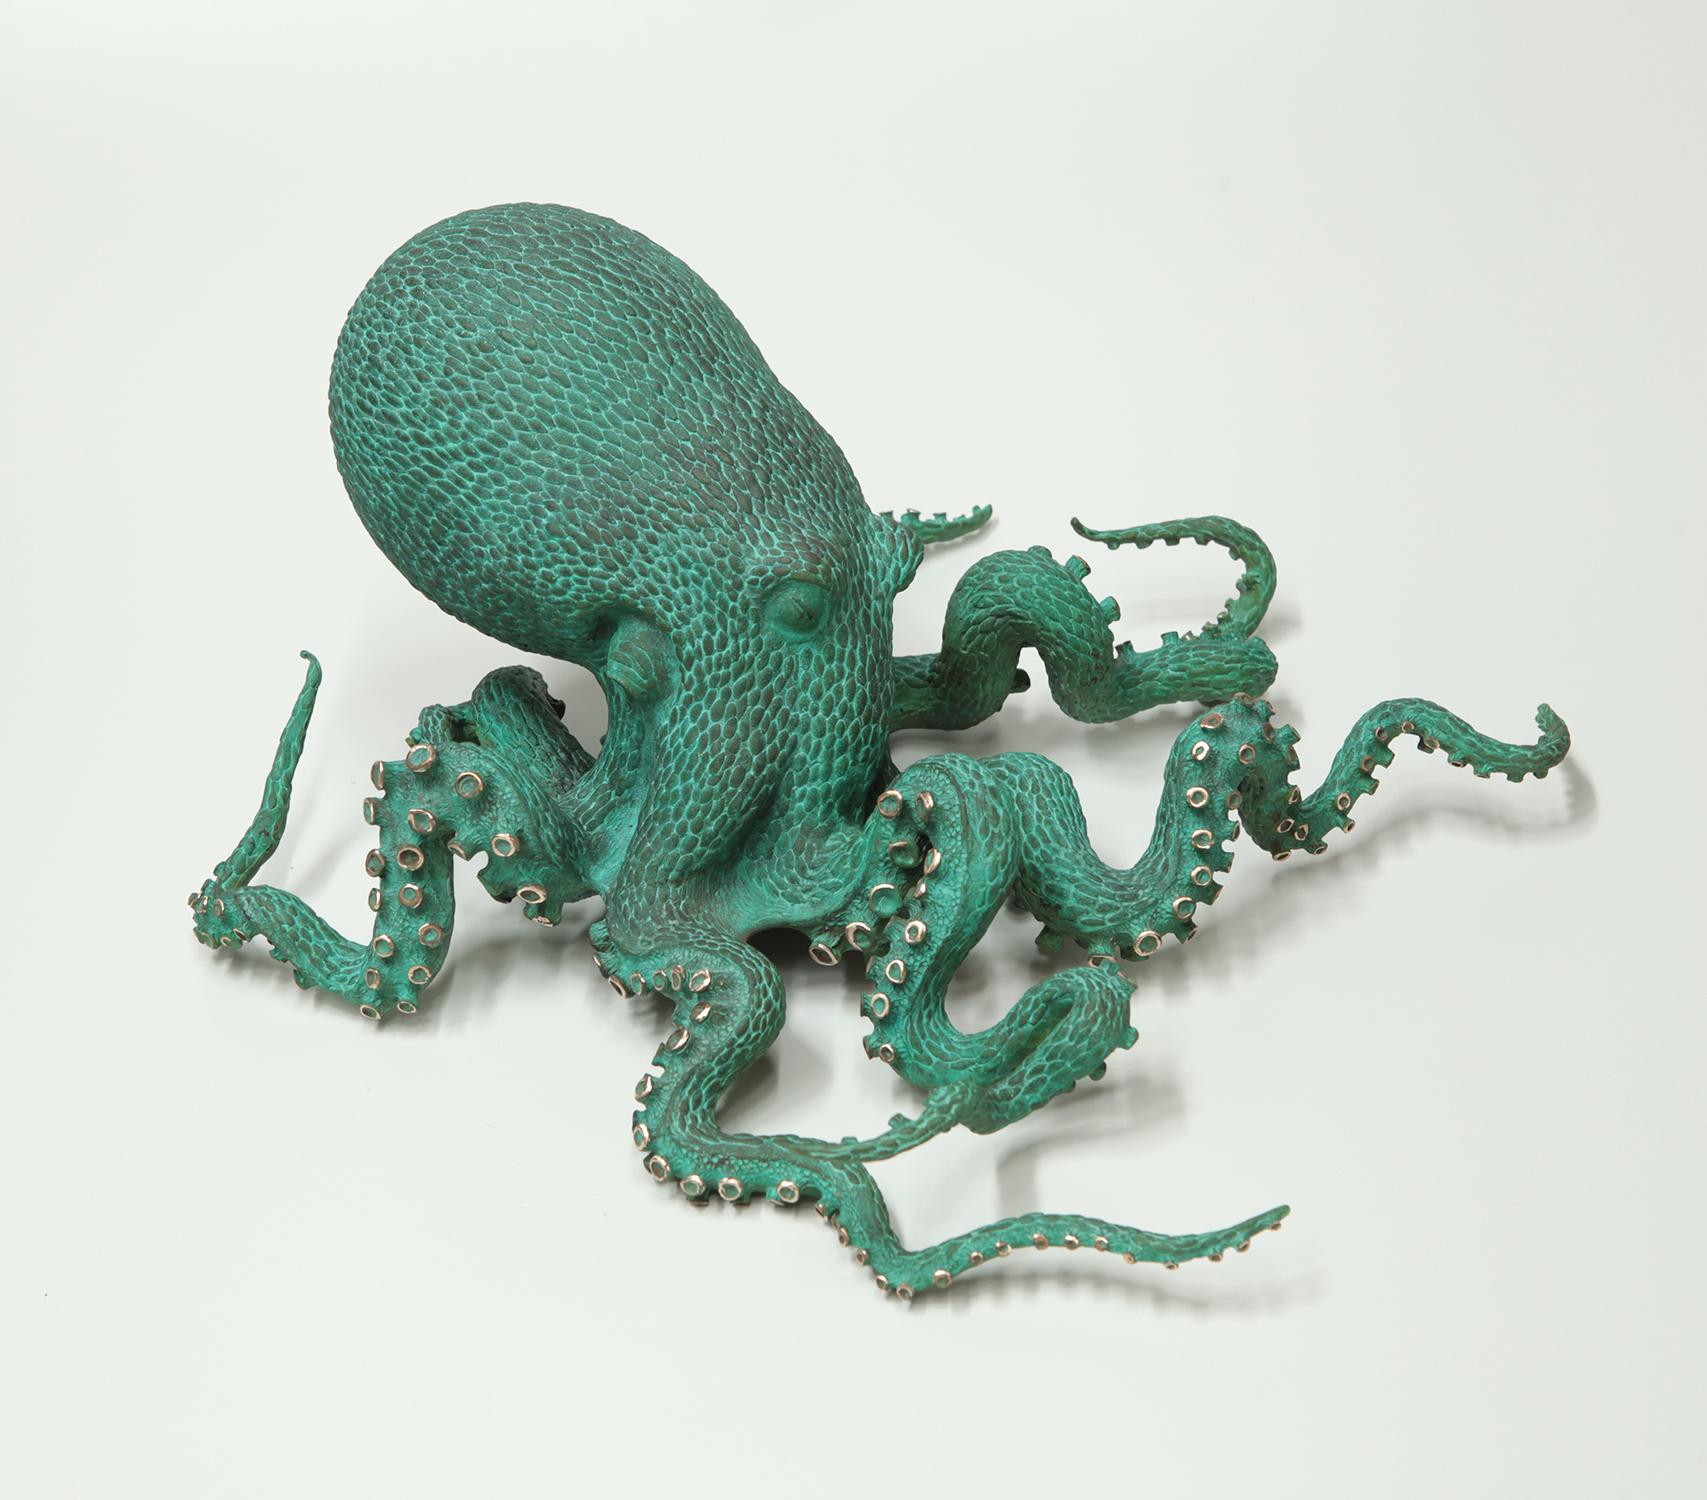 Volodymyr MYKYTENKO Figurative Sculpture - Octopus Sculpture - Limited Edition of 12, 7\12